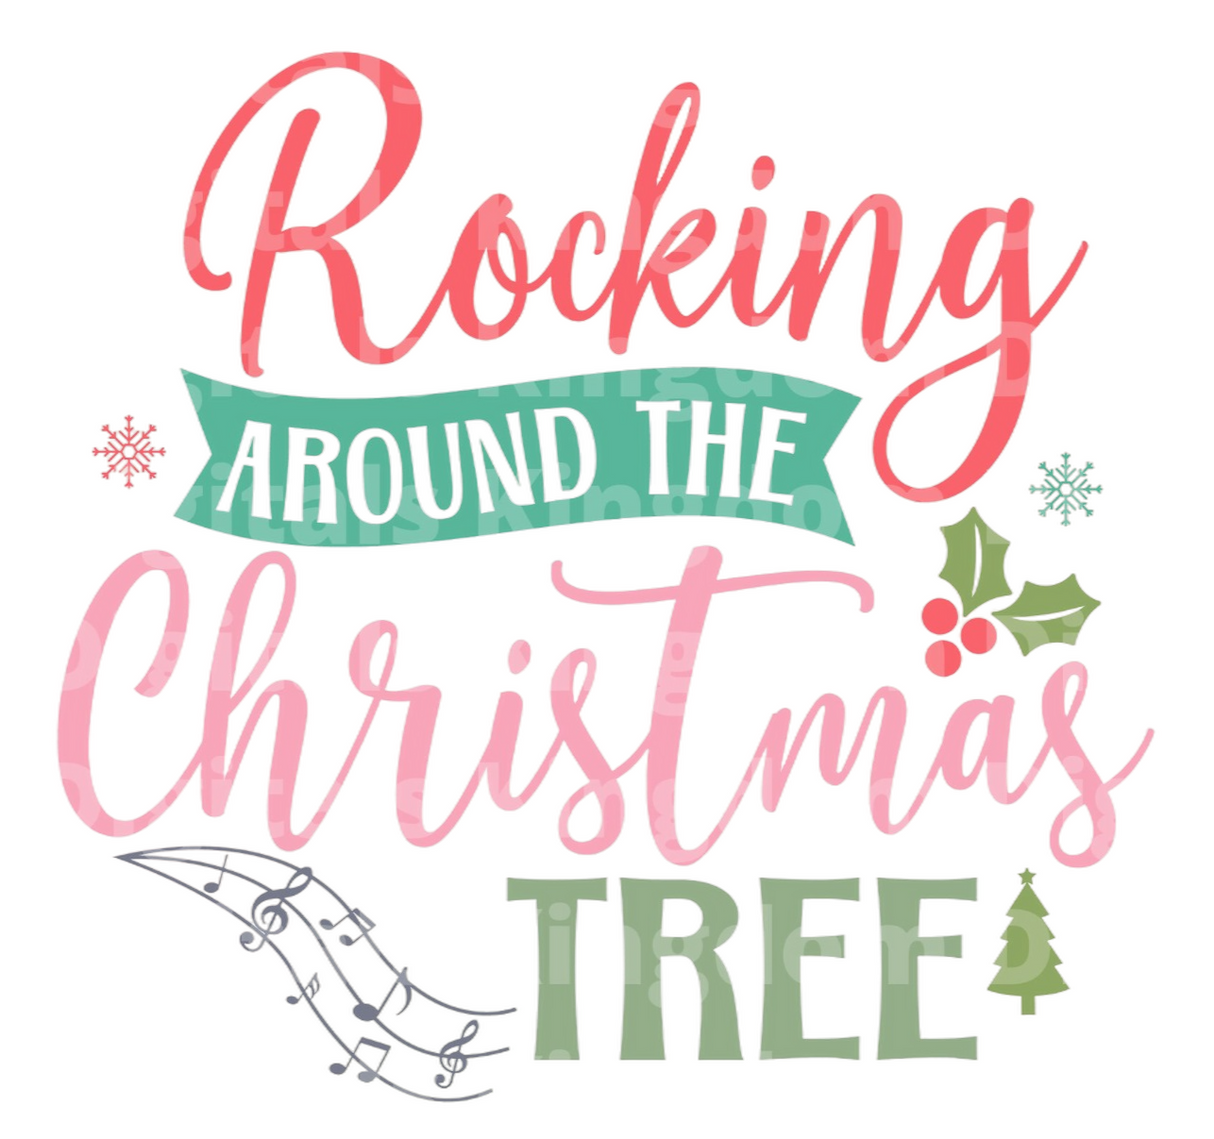 Rocking around the Christmas tree SVG Cut File